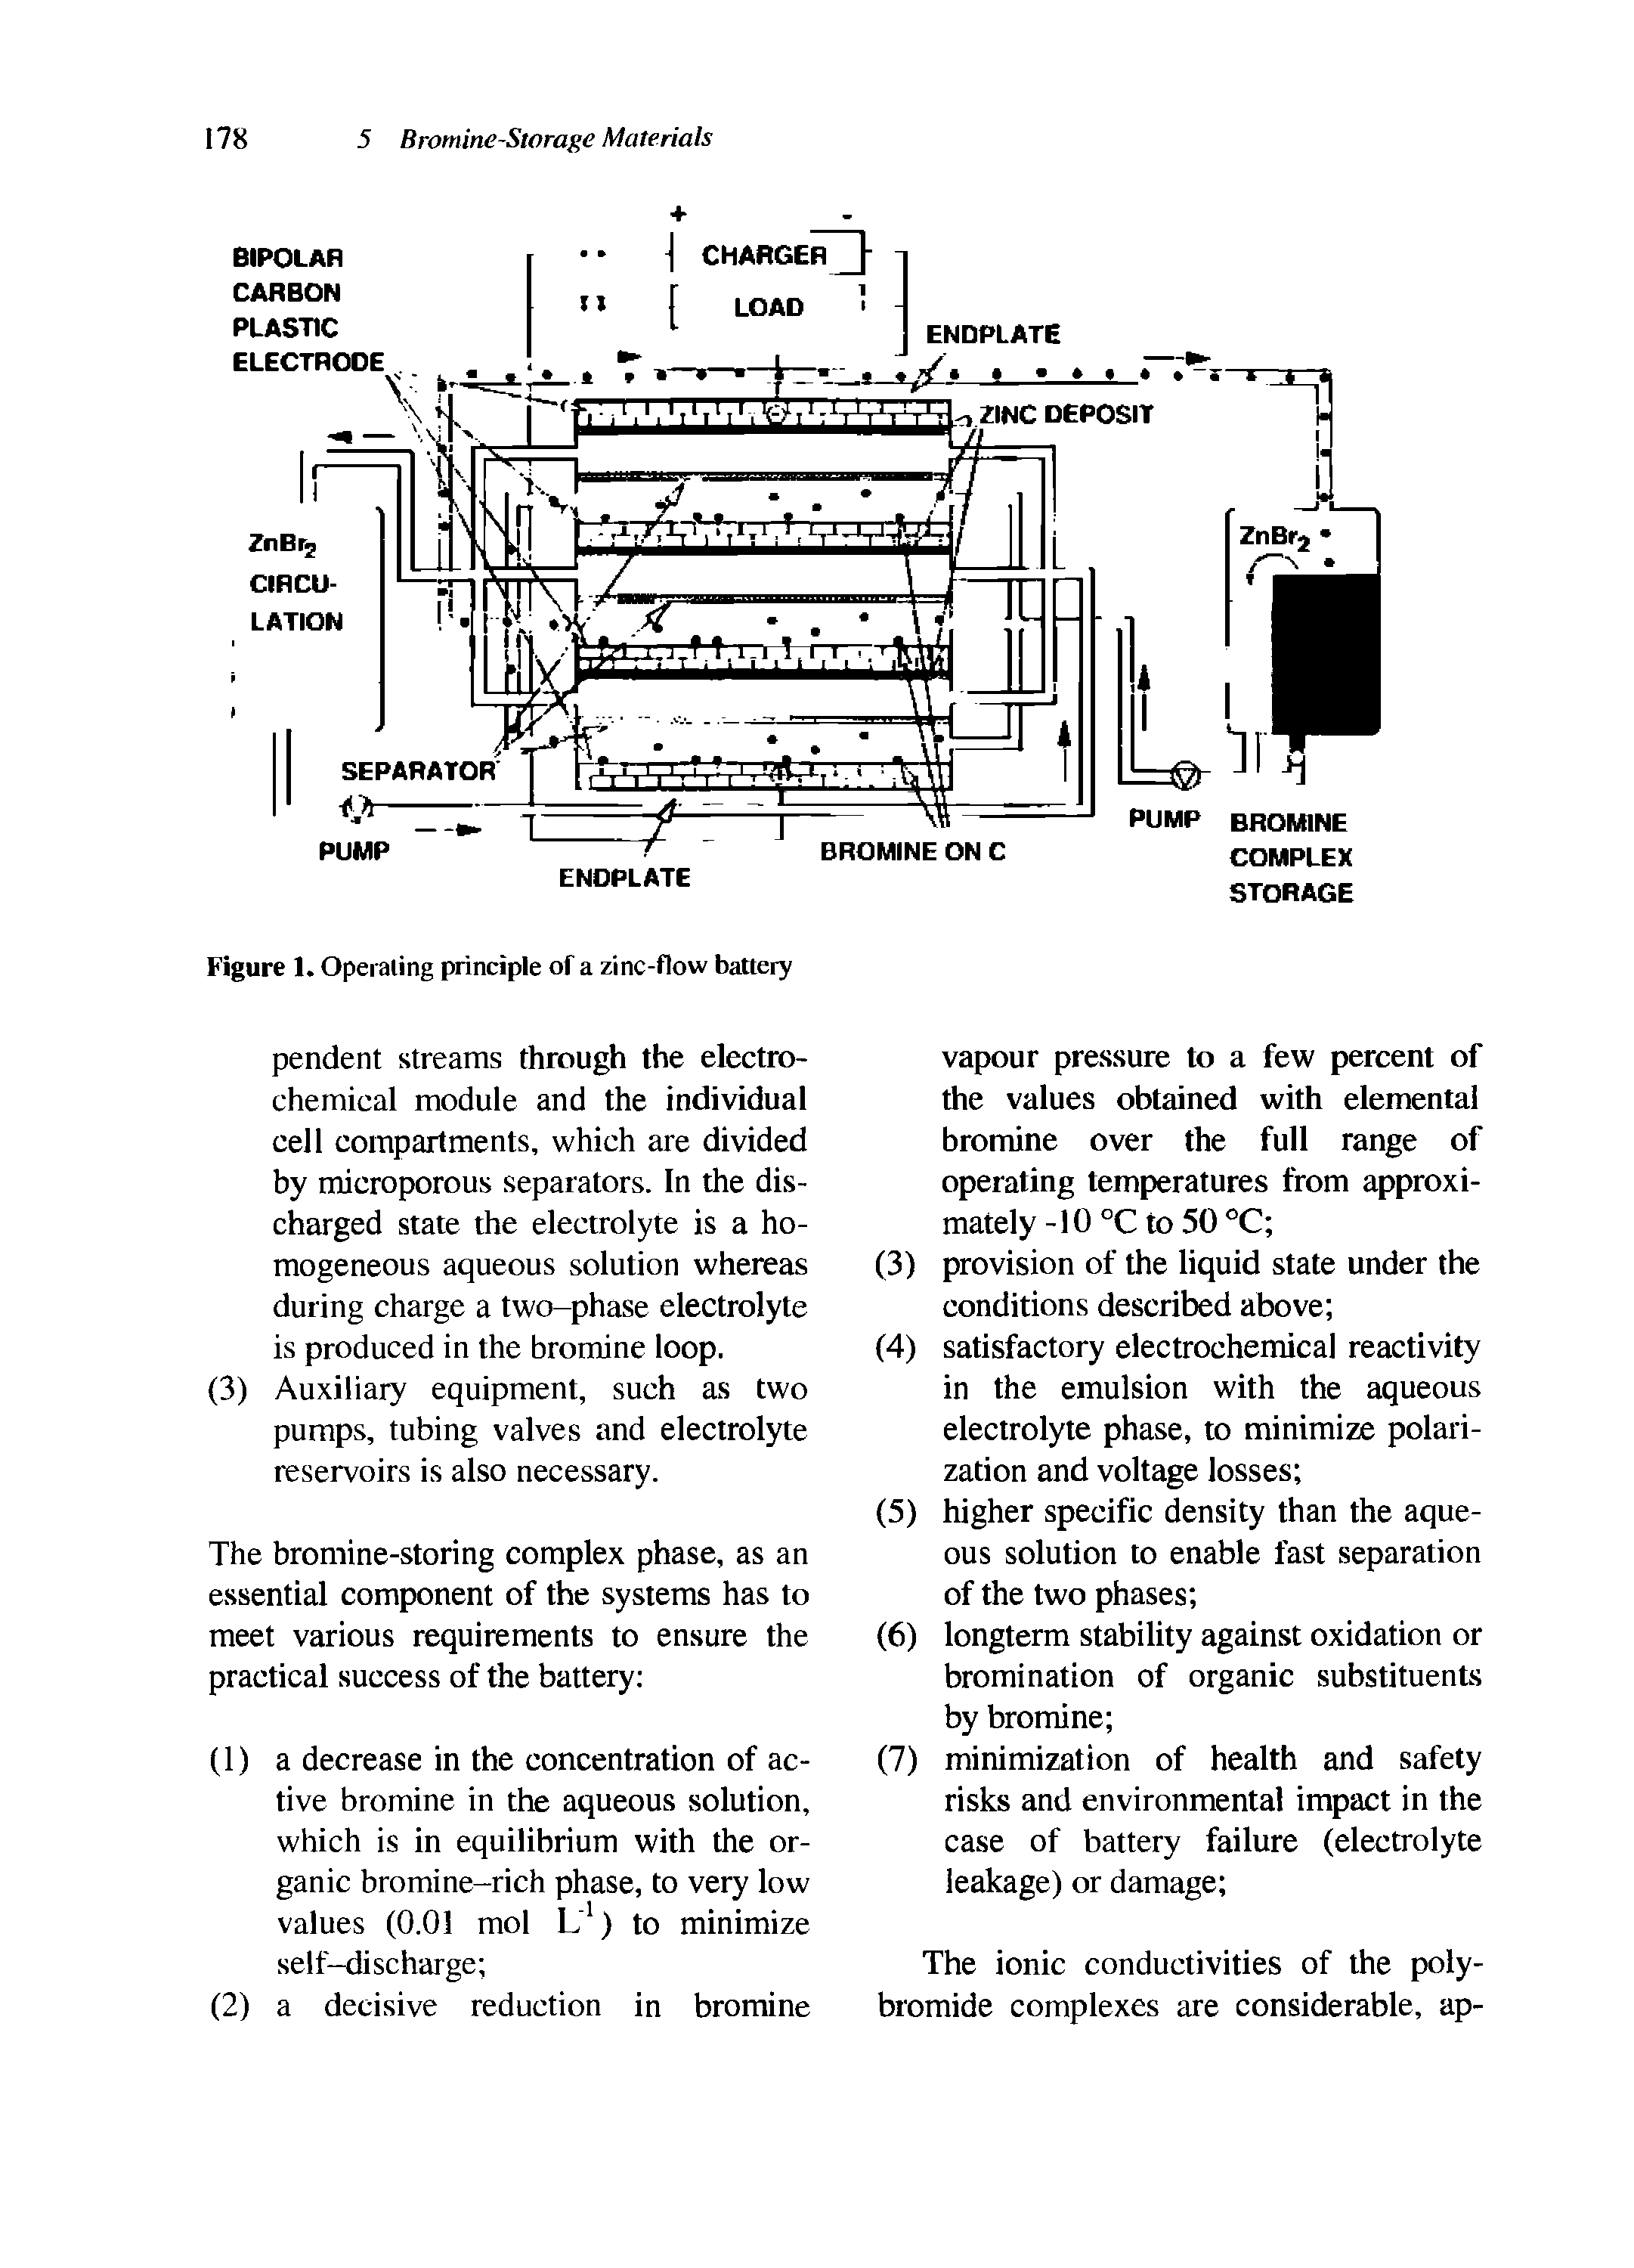 Figure 1. Operating principle of a zinc-flow battery...